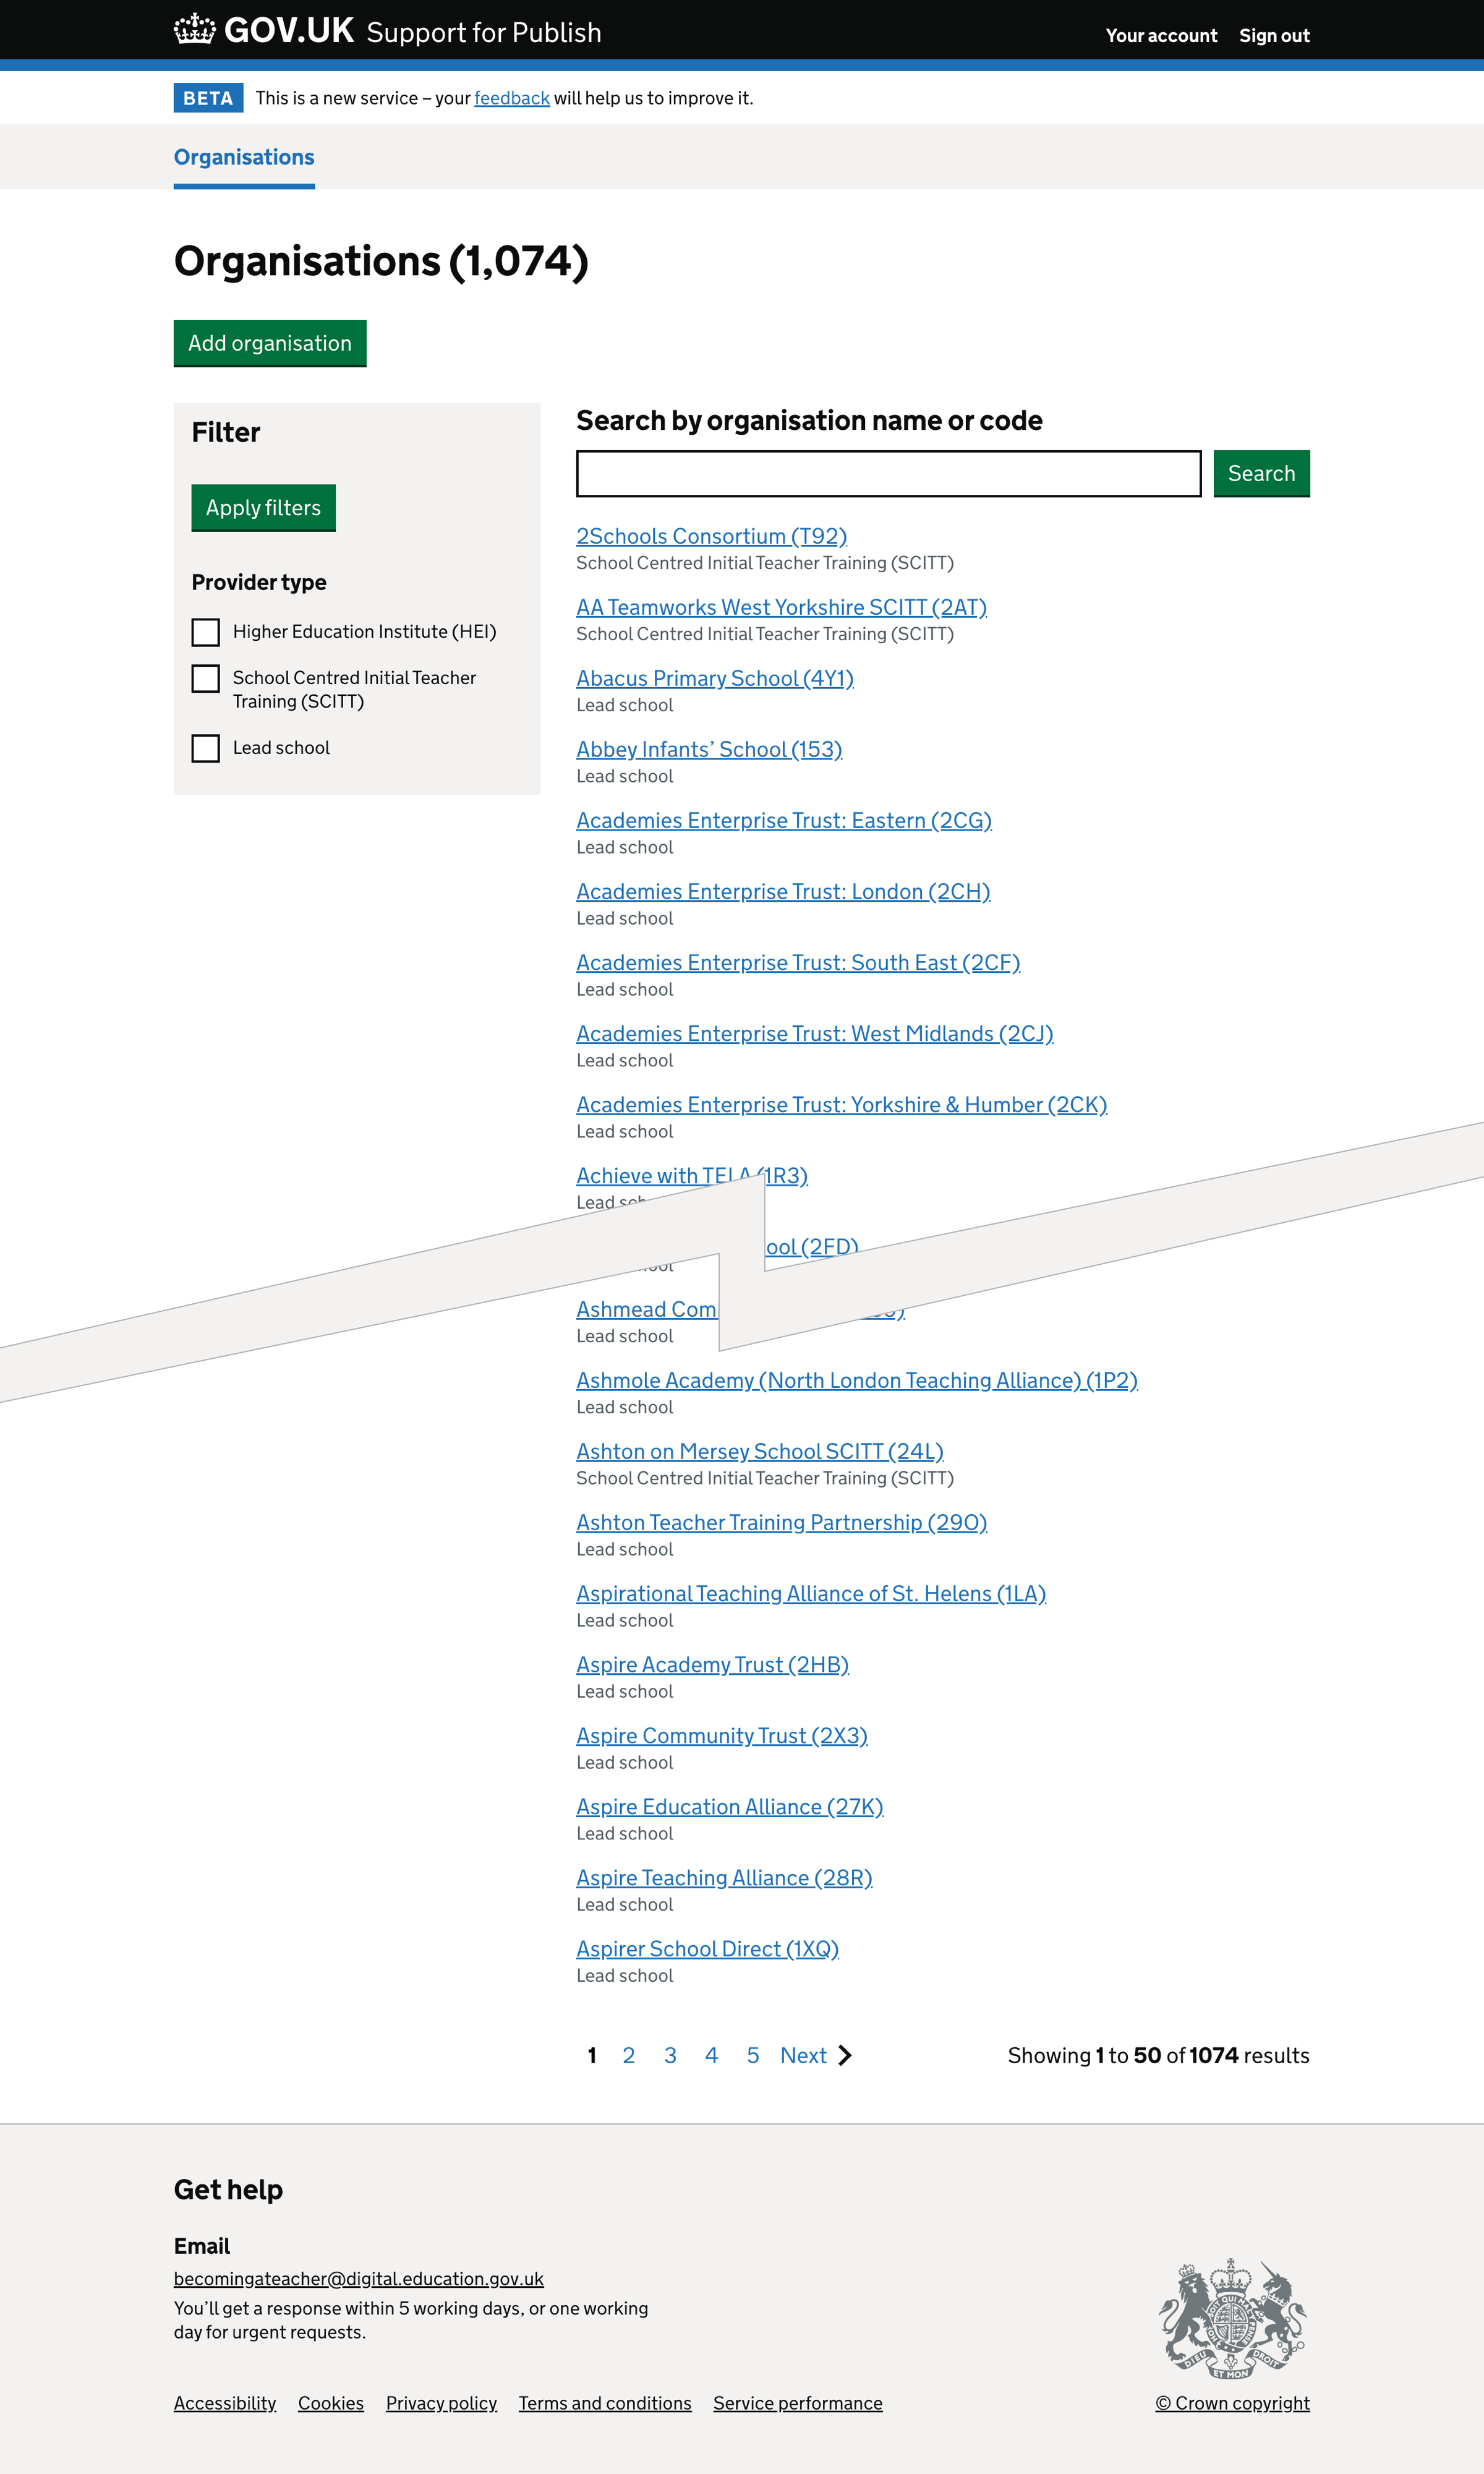 Screenshot of List of organisations